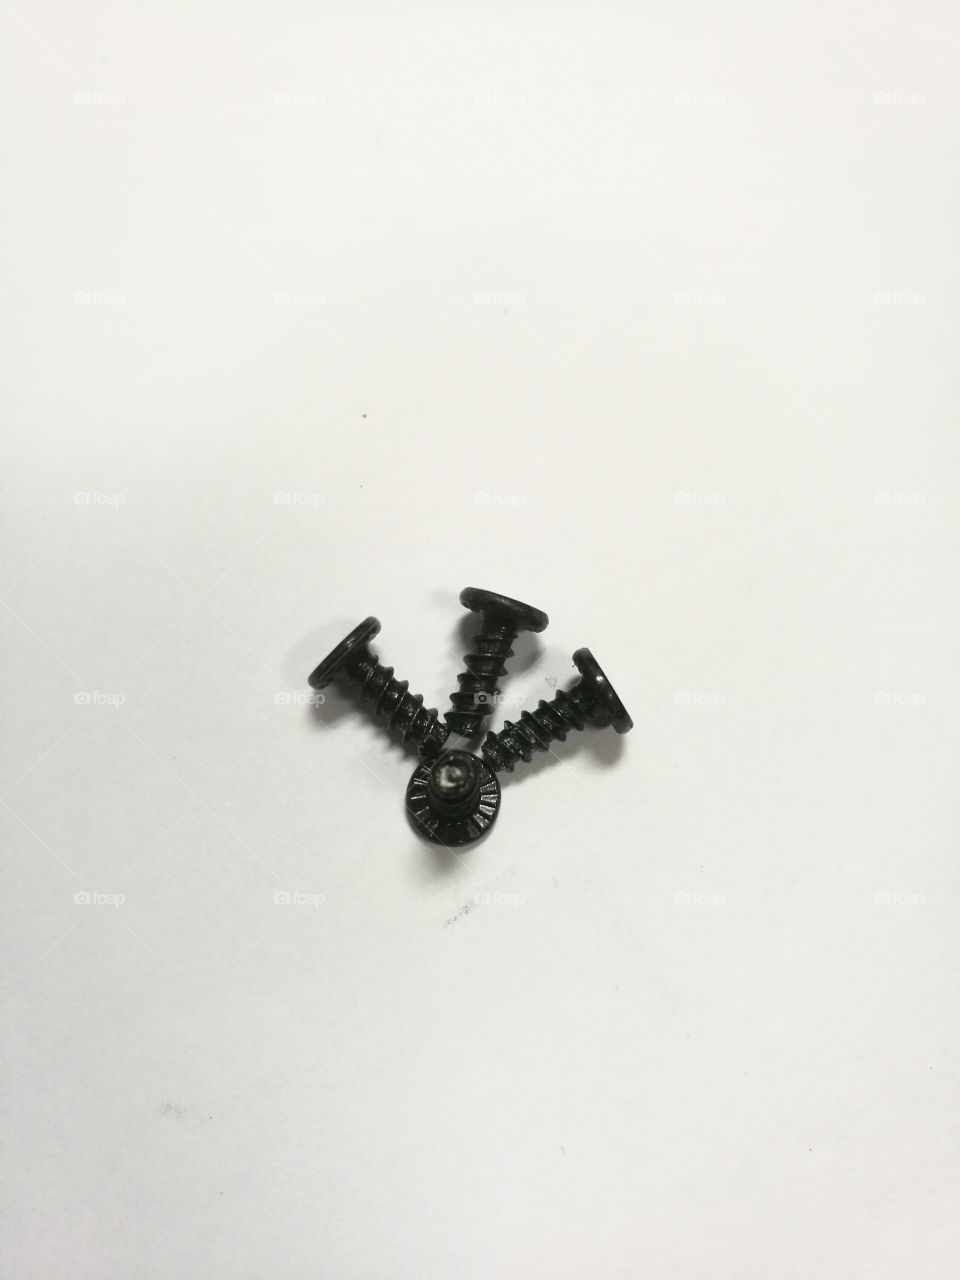 Black screw on a white background